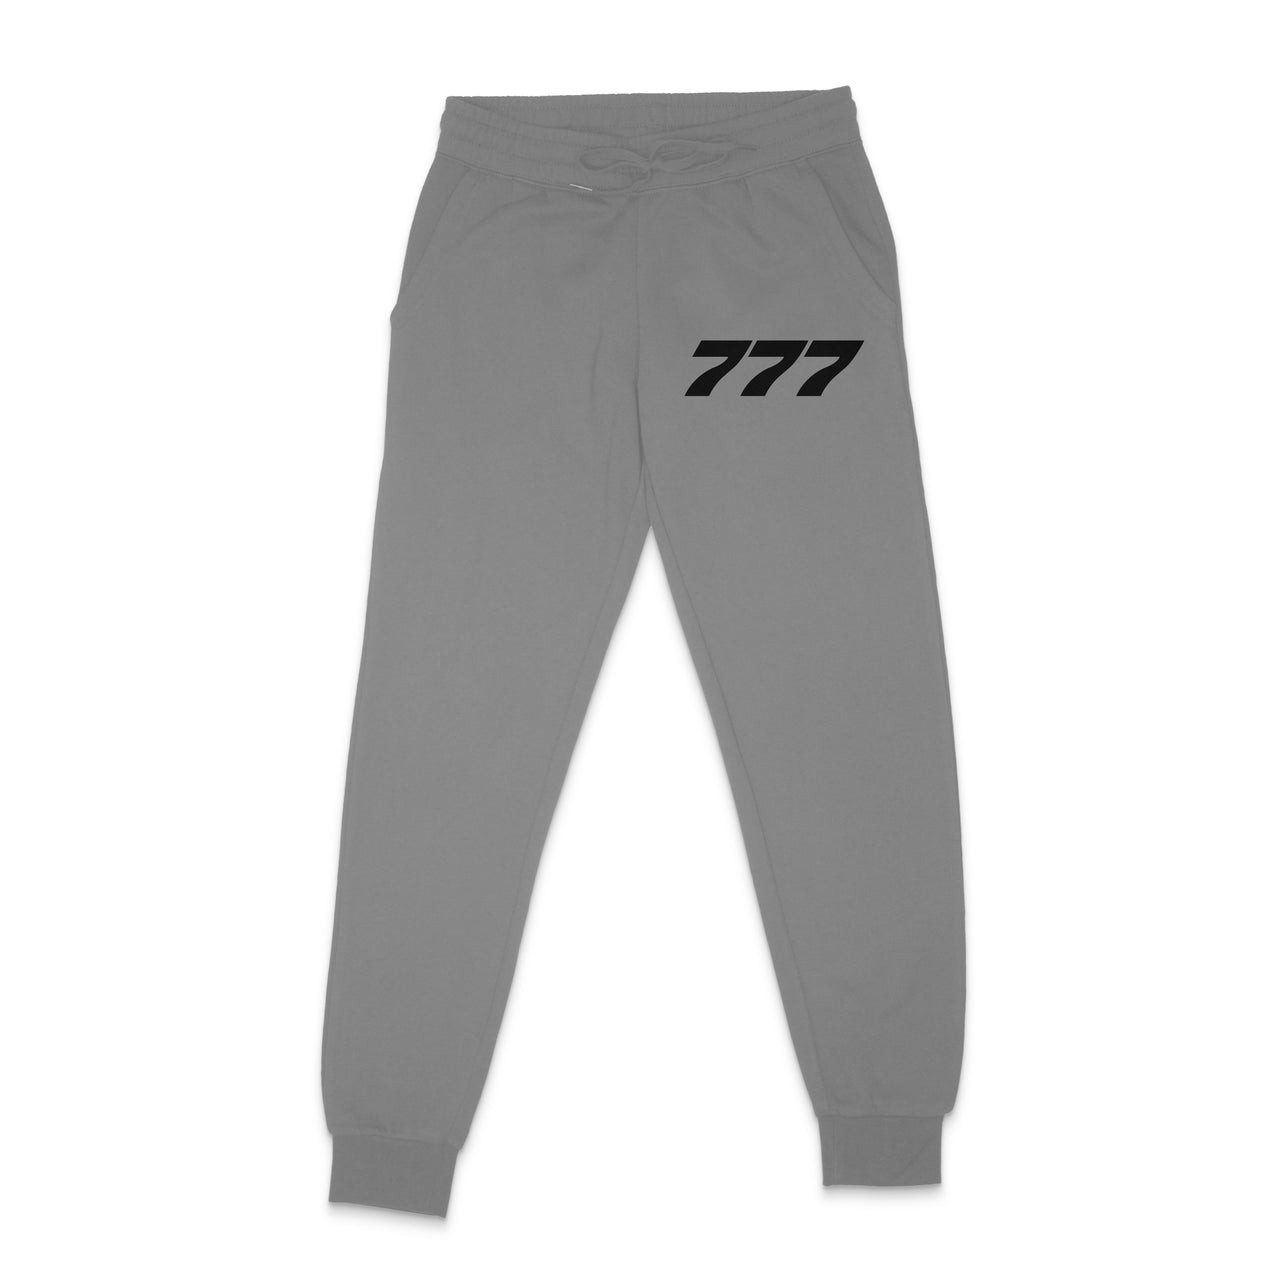 777 Flat Text Designed Sweatpants